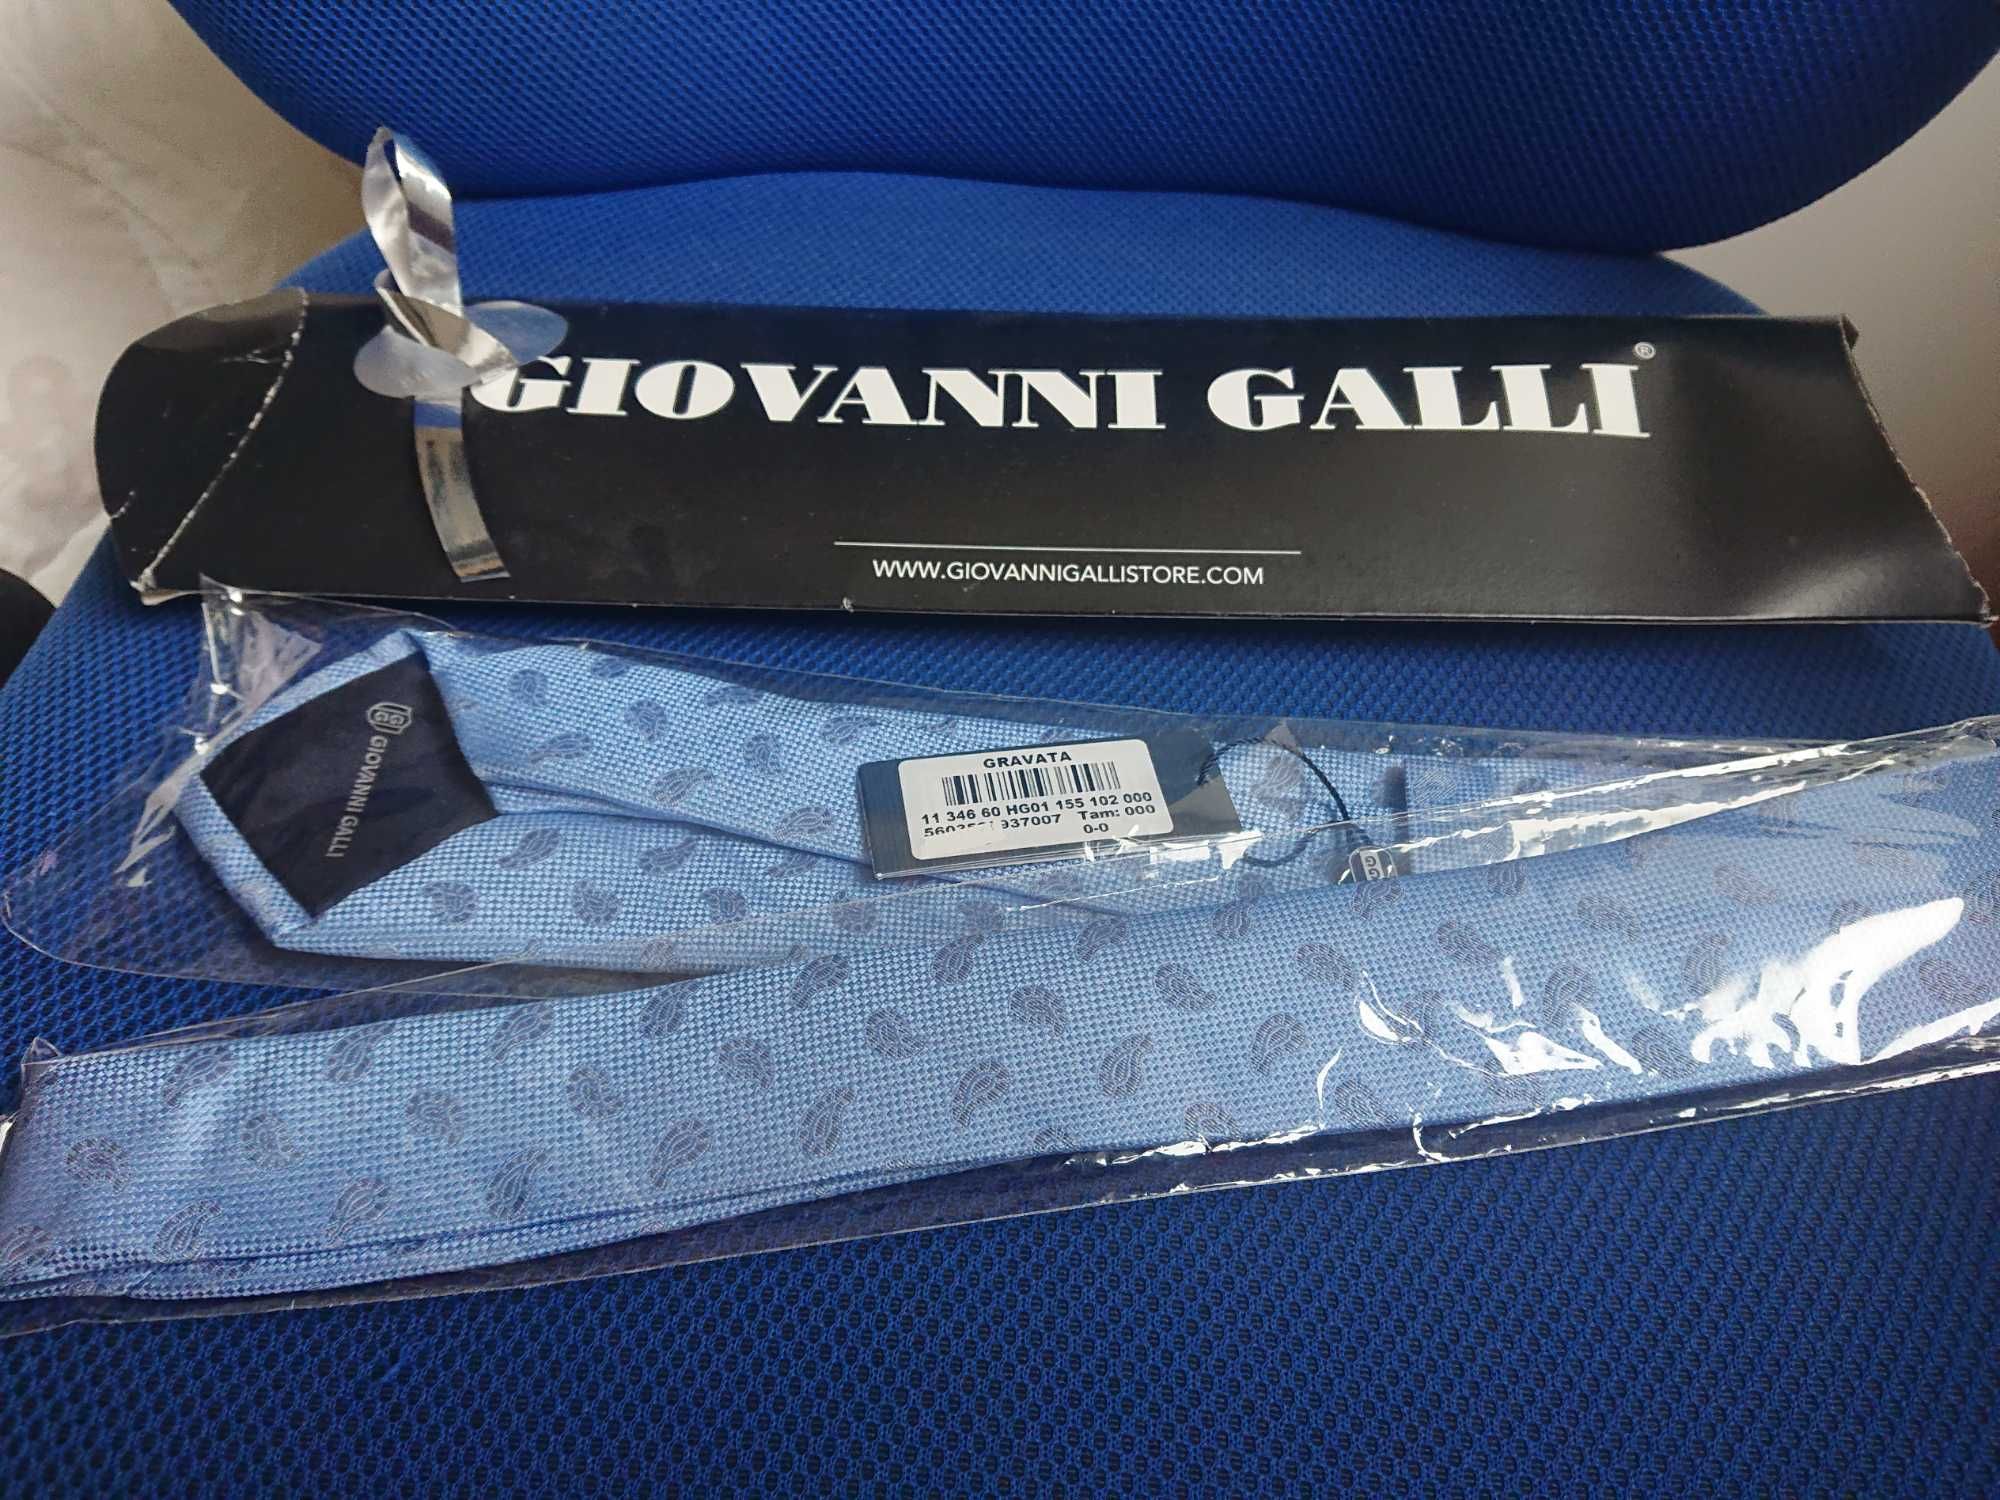 Gravata Giovanni Galli Nova selada nunca aberta com caixa e original